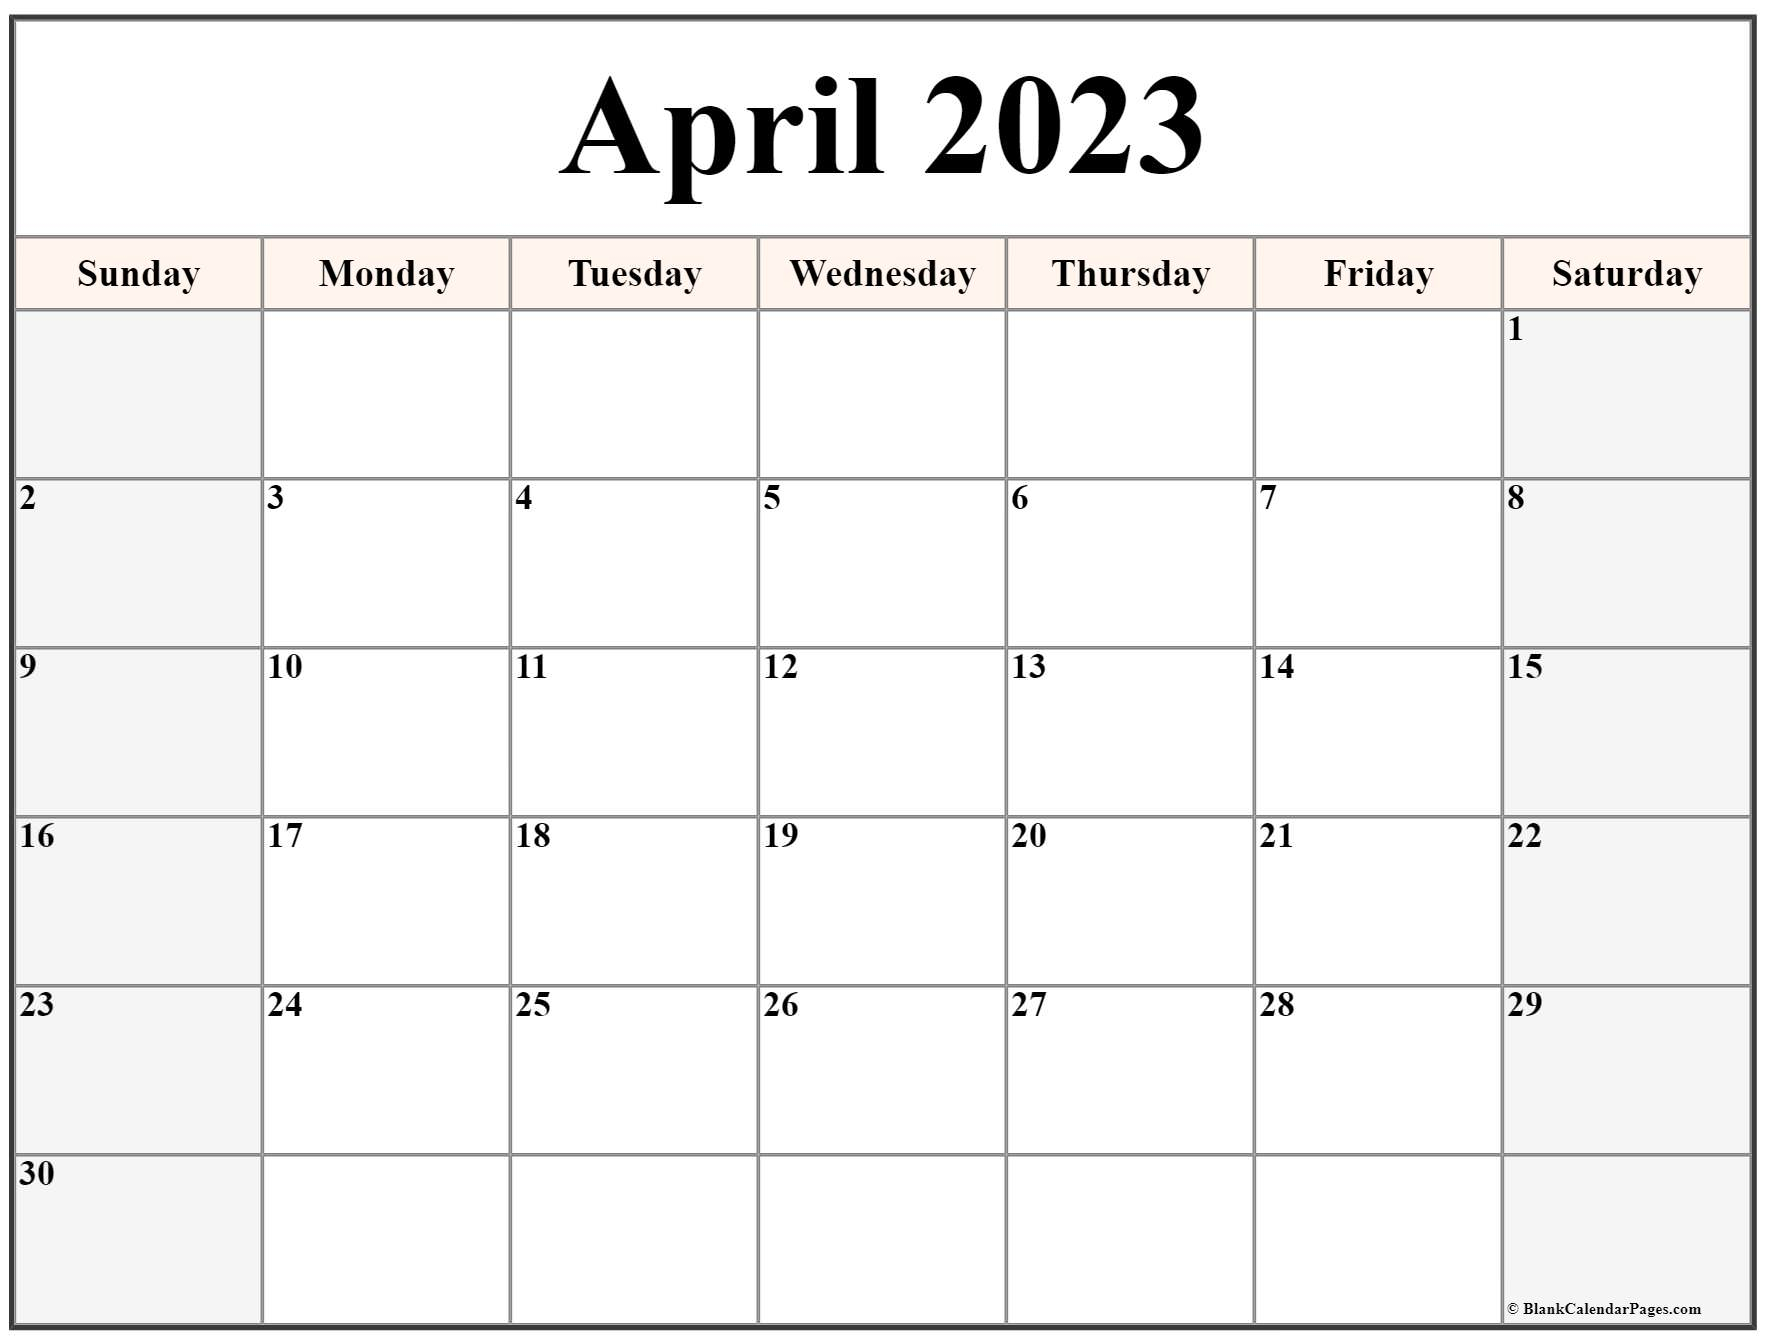 Free Printable Blank Calendar April 2023 2023 Freeblankcalendar Com